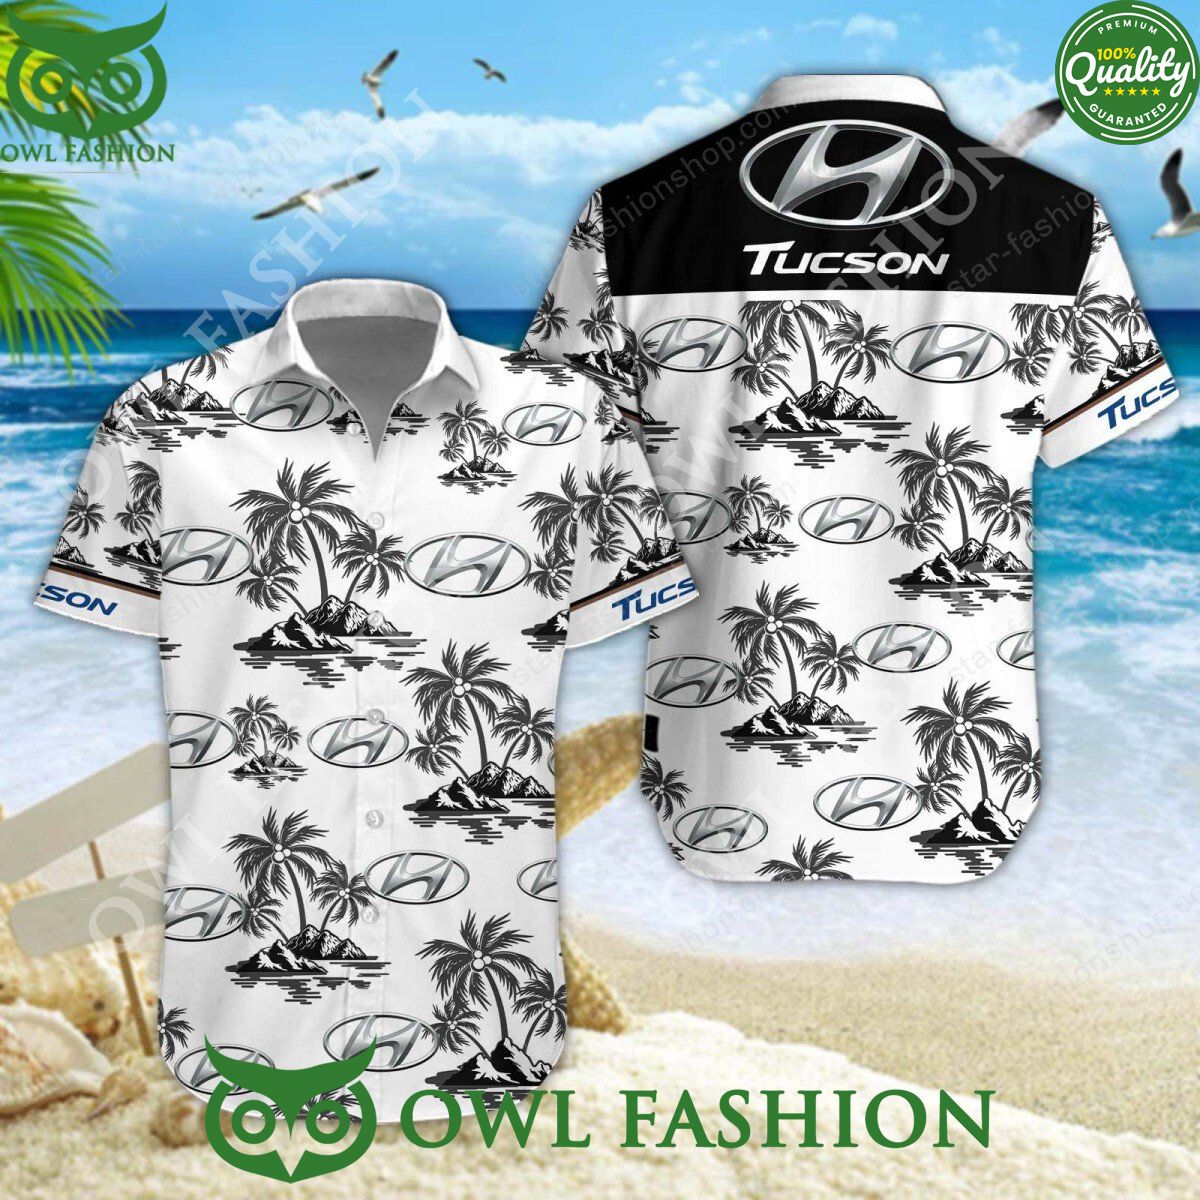 hyundai tucson classic car brand limited hawaiian shirt and short 1 MB9qA.jpg